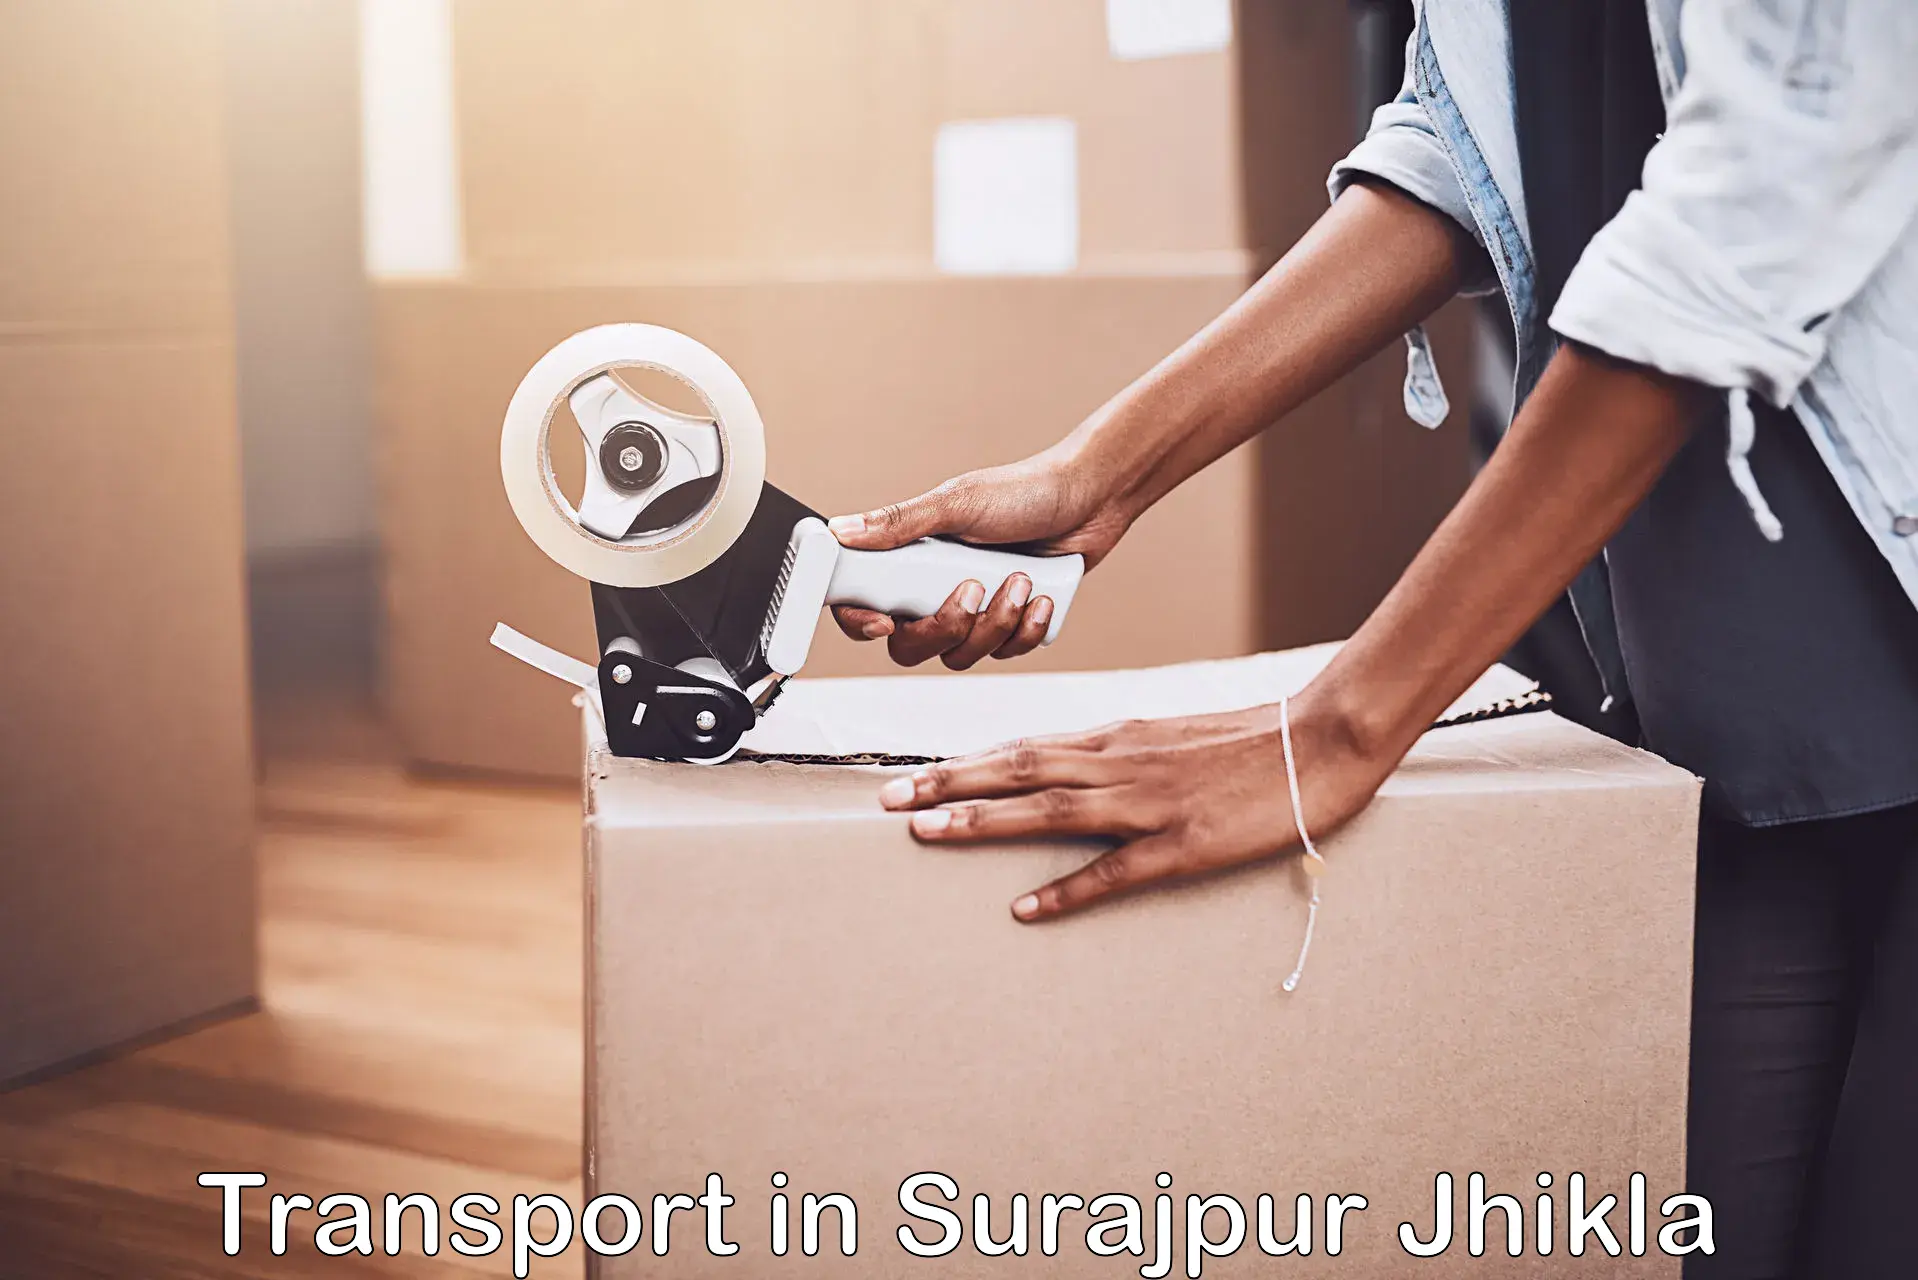 Express transport services in Surajpur Jhikla